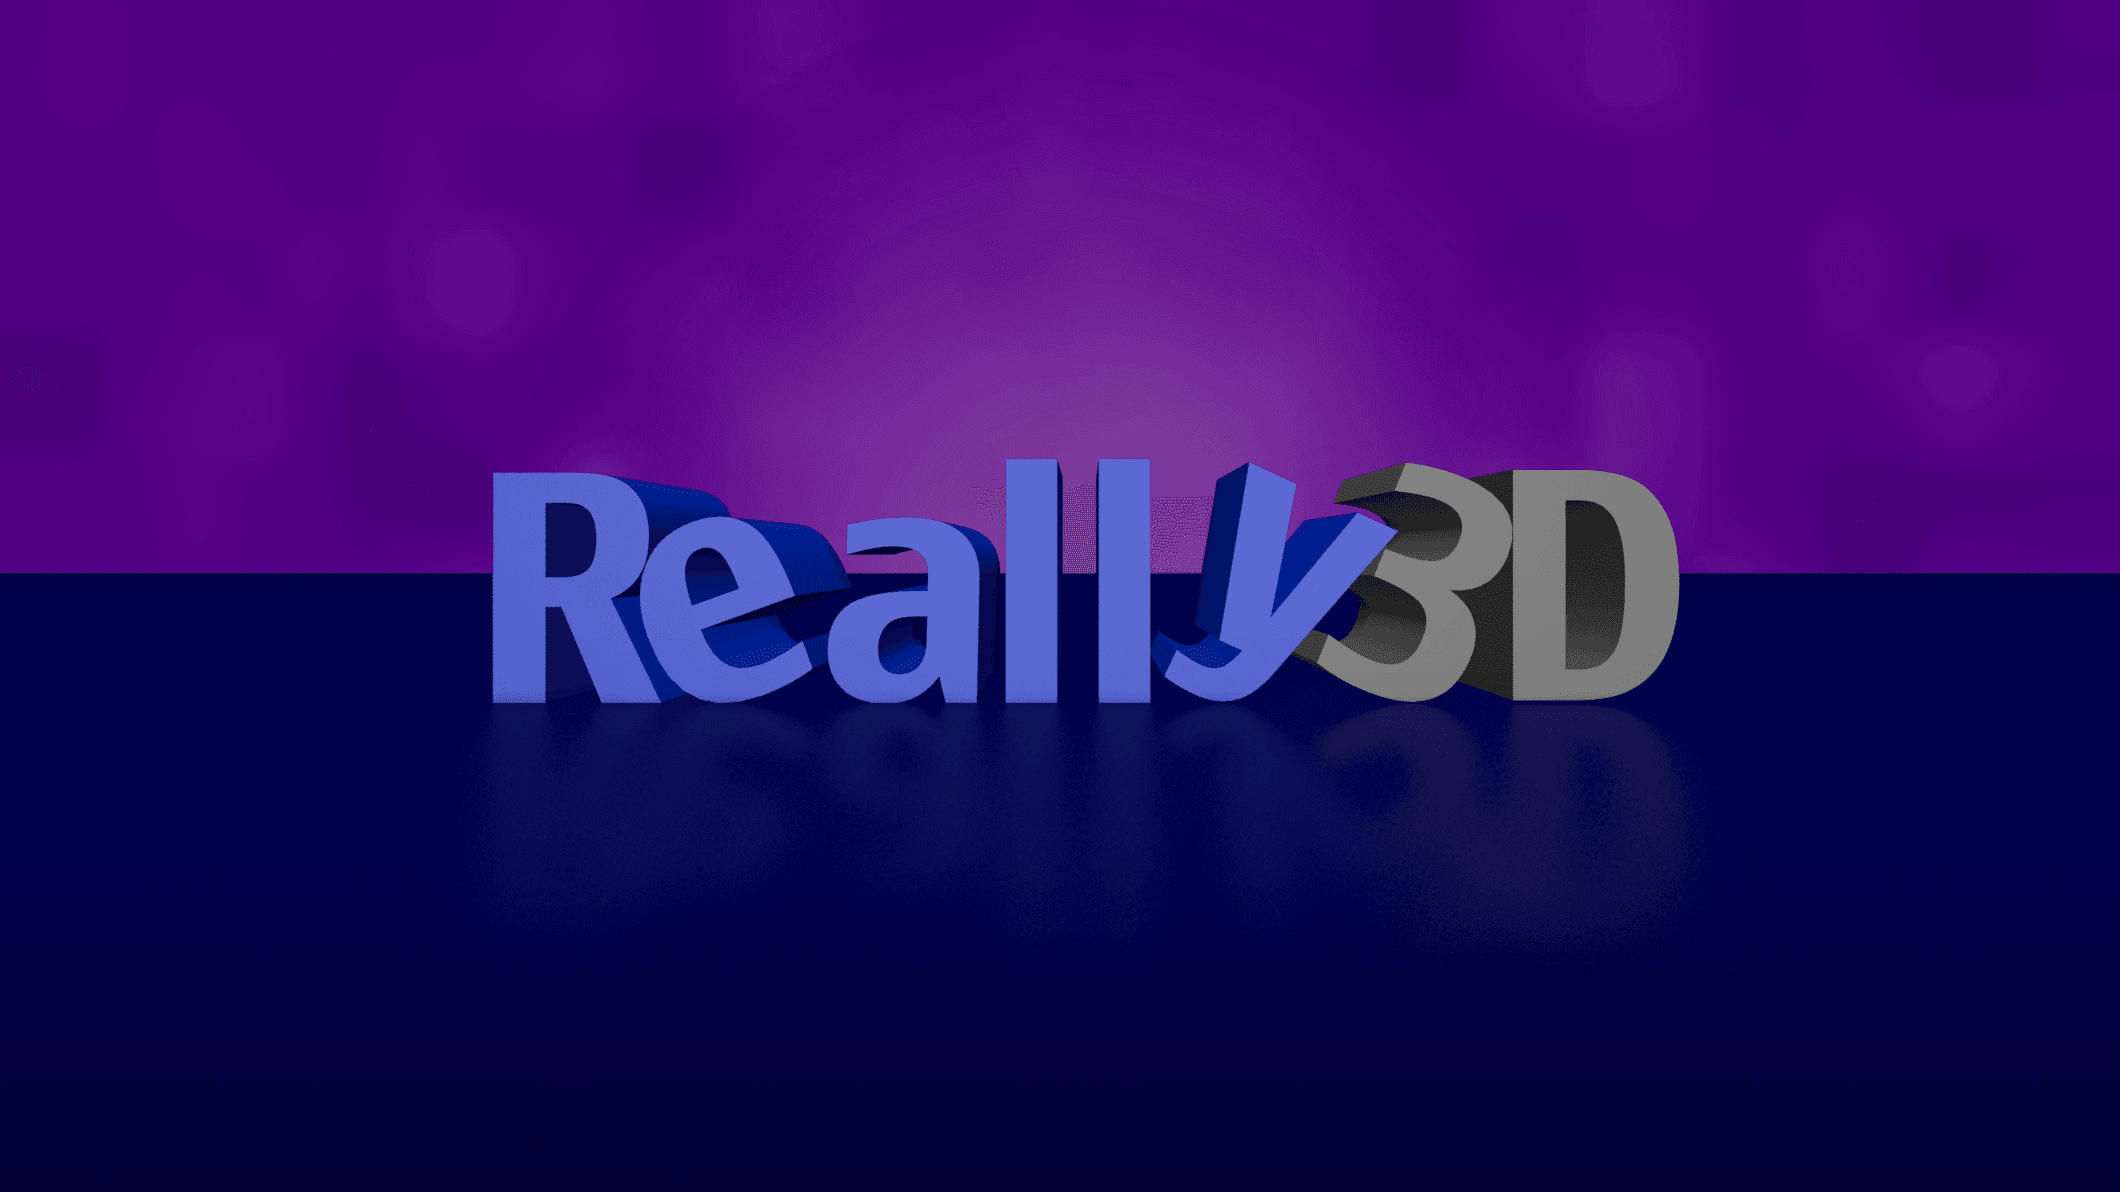 Really3D 横幅